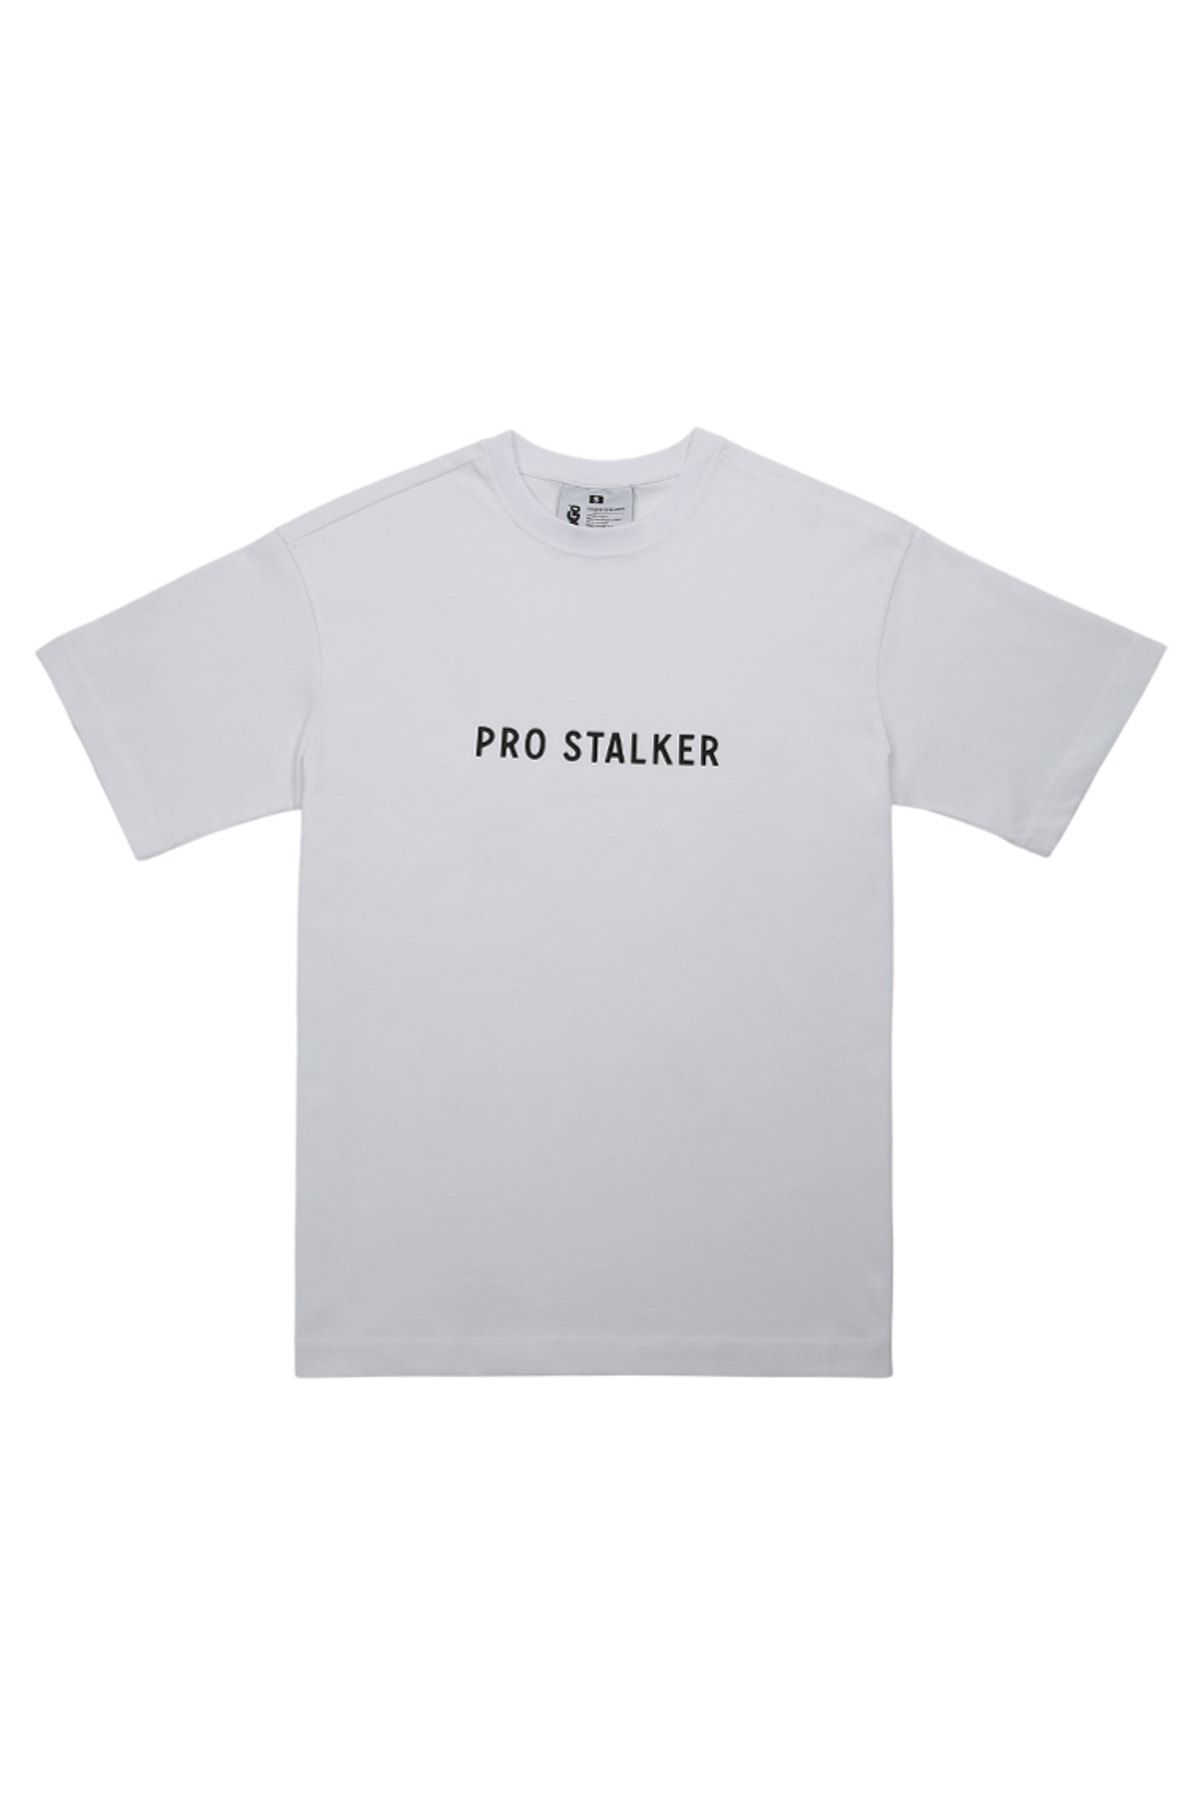 Dogo Unisex Vegan Beyaz T-shirt - Pro Stalker Tasarım